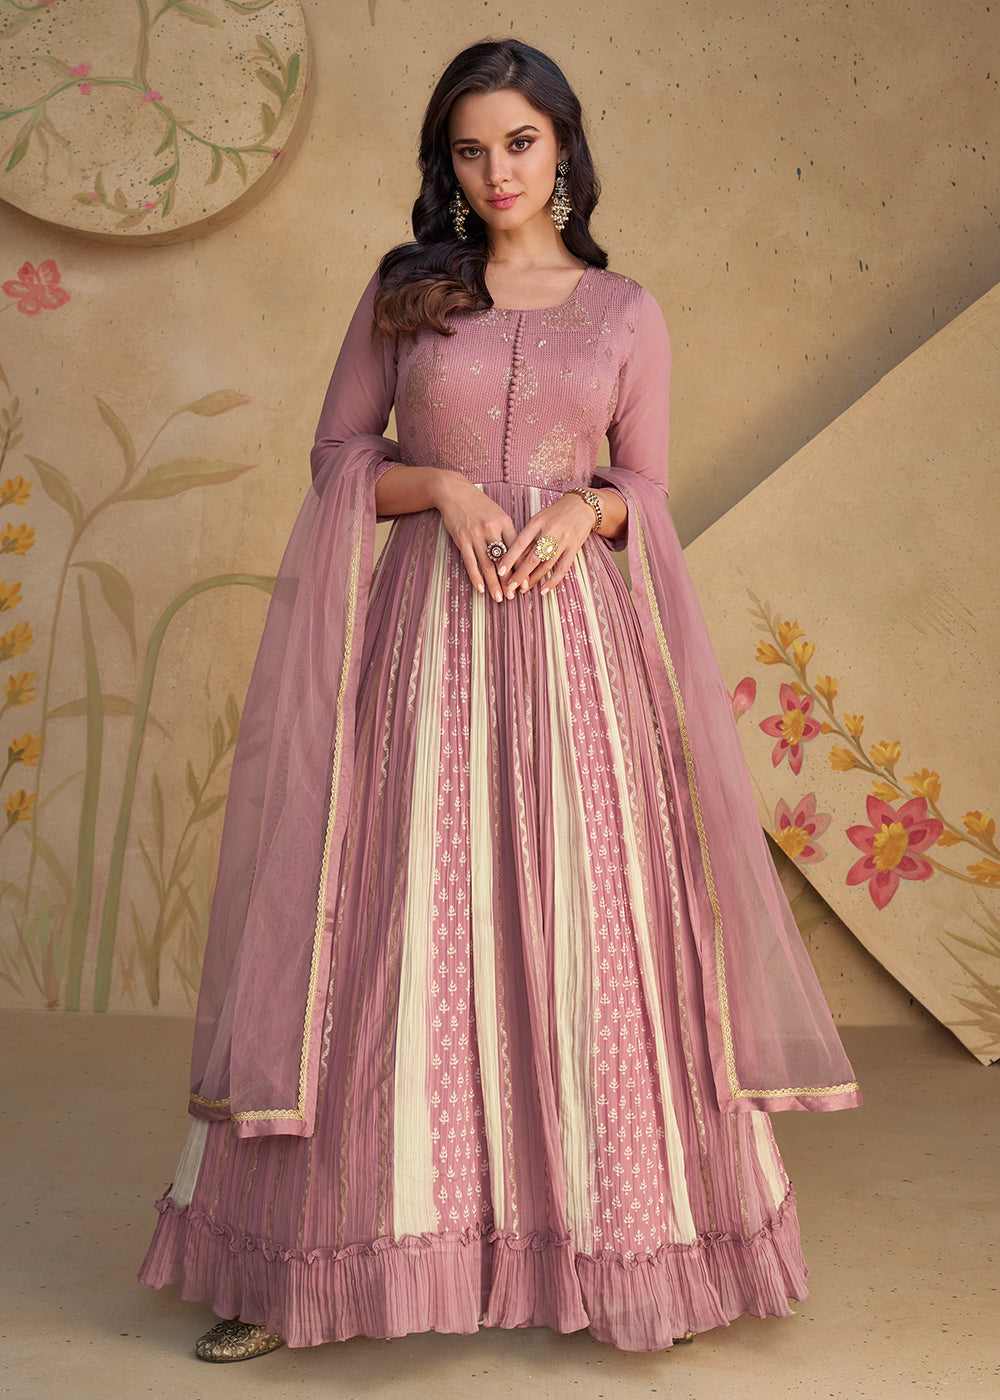 Buy Now Mauve Pink Sequins & Thread Wedding Festive Anarkali Dress Online in USA, UK, Australia, New Zealand, Canada & Worldwide at Empress Clothing.